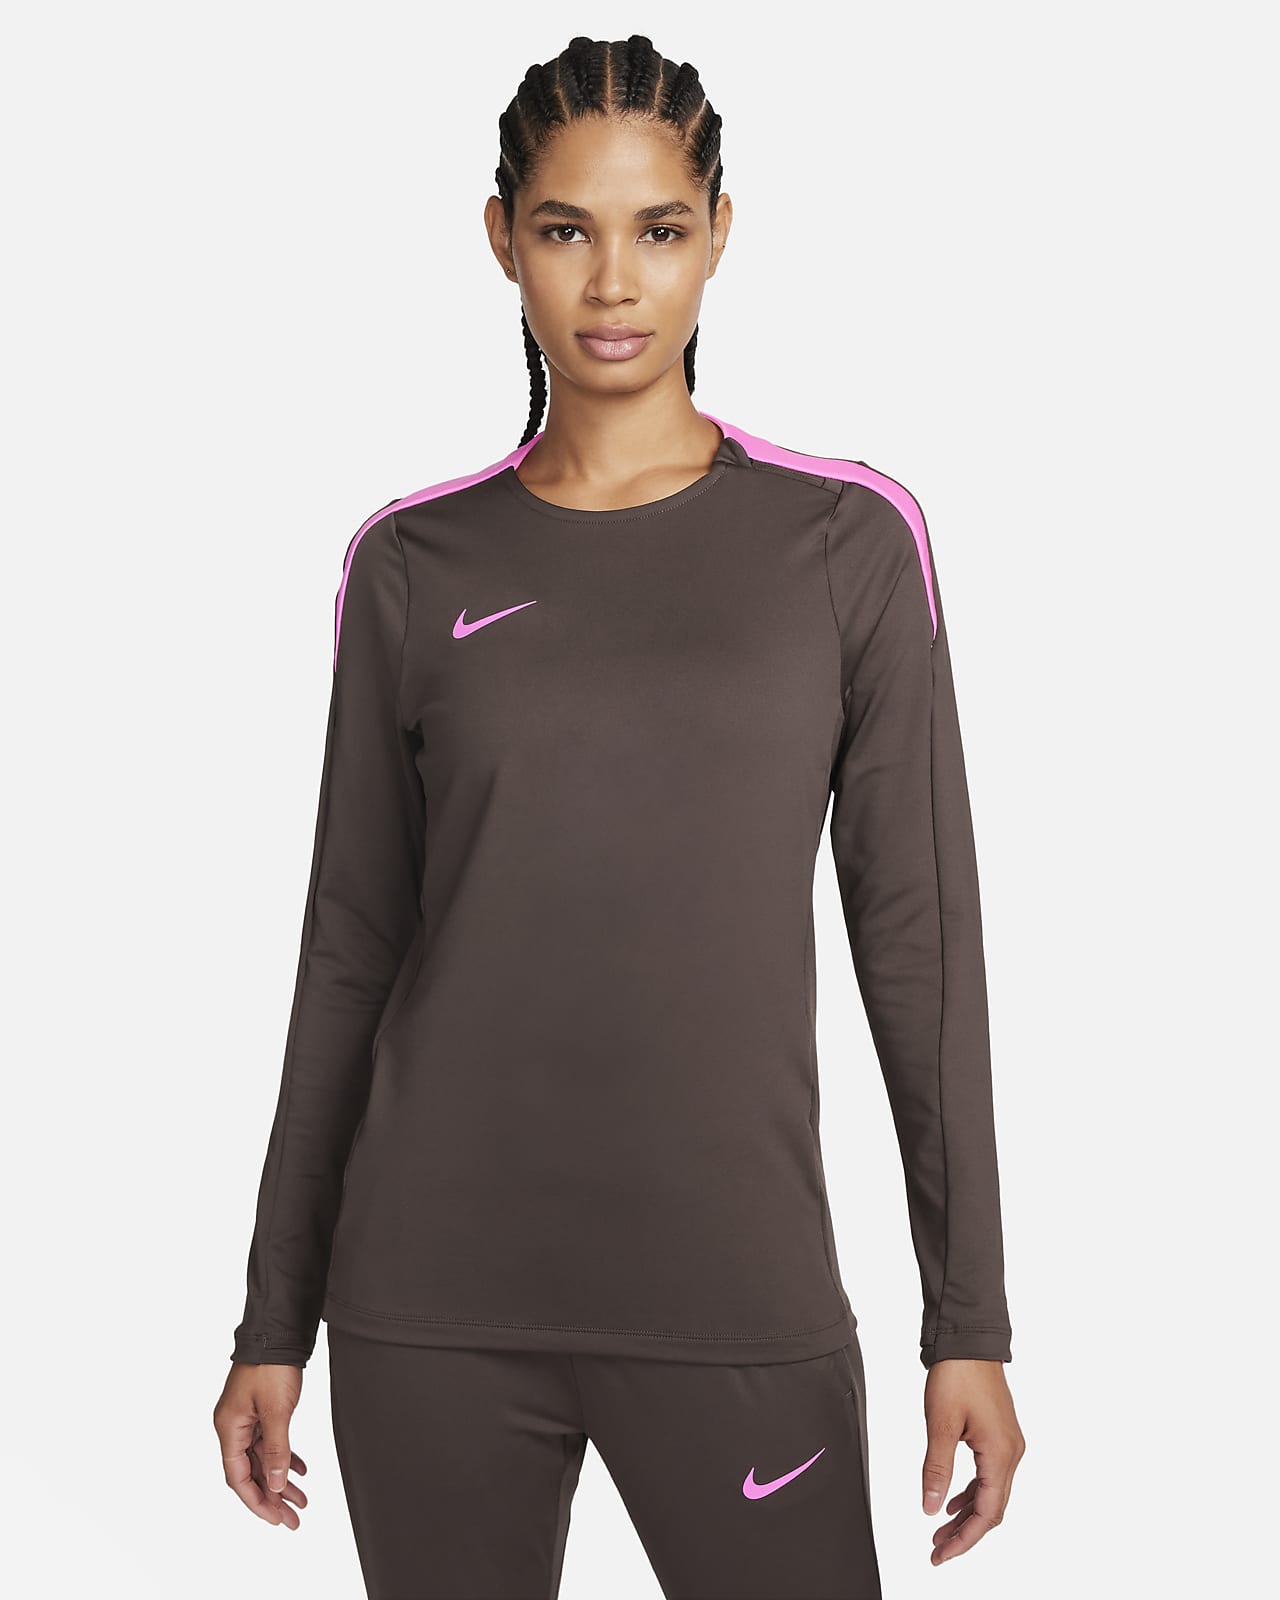 Playera de cuello redondo de fútbol Dri-FIT para mujer Nike Strike